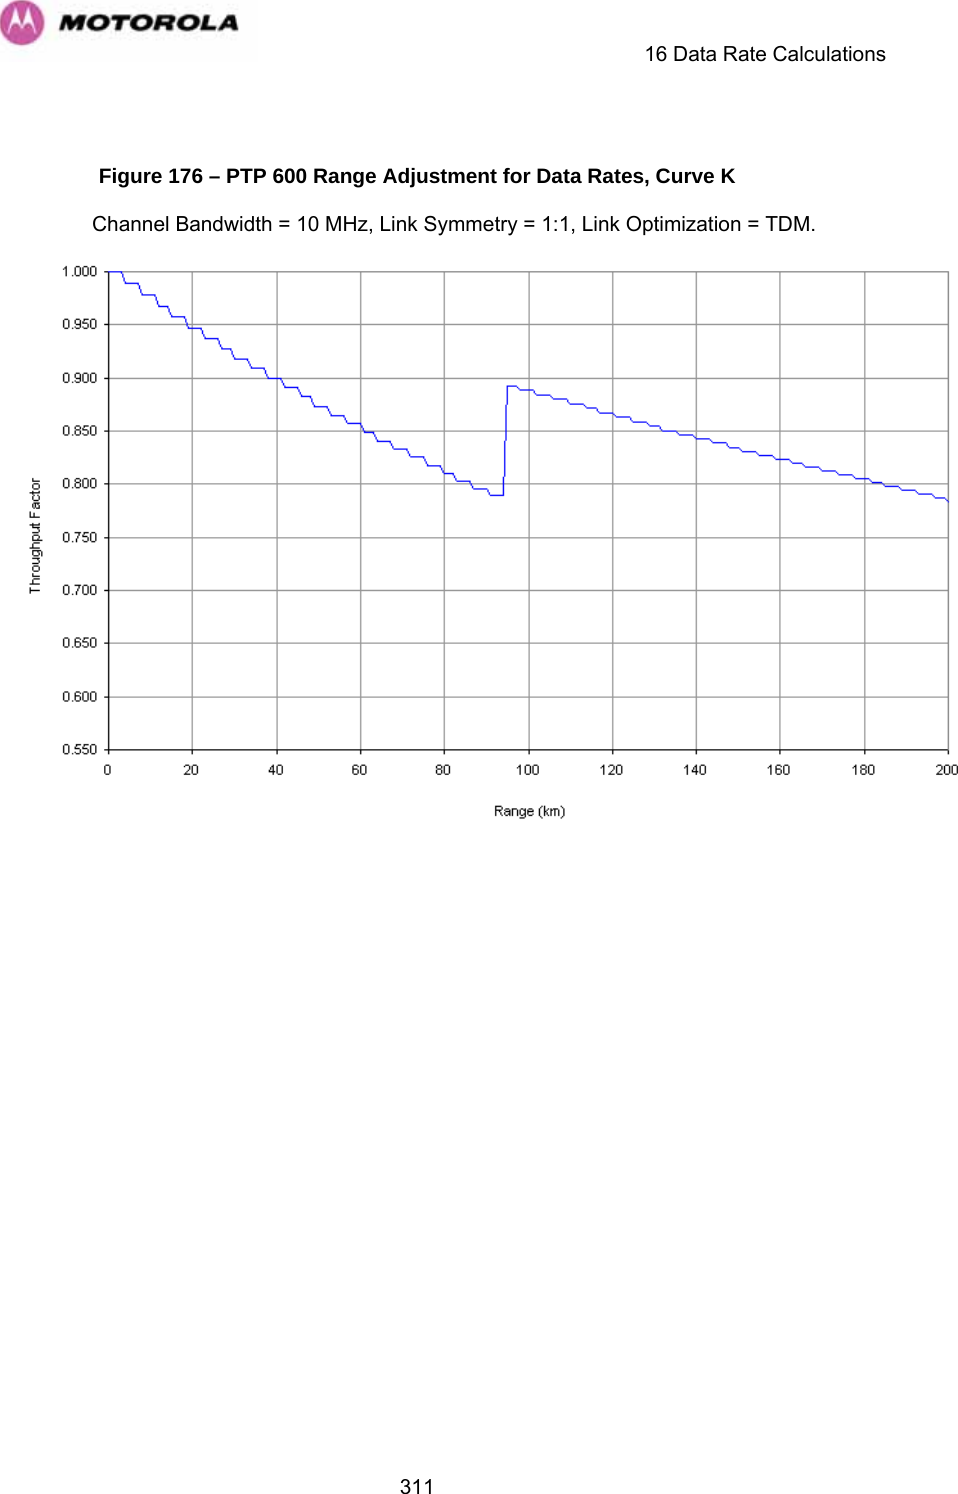     16 Data Rate Calculations  311 Figure 176 – PTP 600 Range Adjustment for Data Rates, Curve K Channel Bandwidth = 10 MHz, Link Symmetry = 1:1, Link Optimization = TDM.  